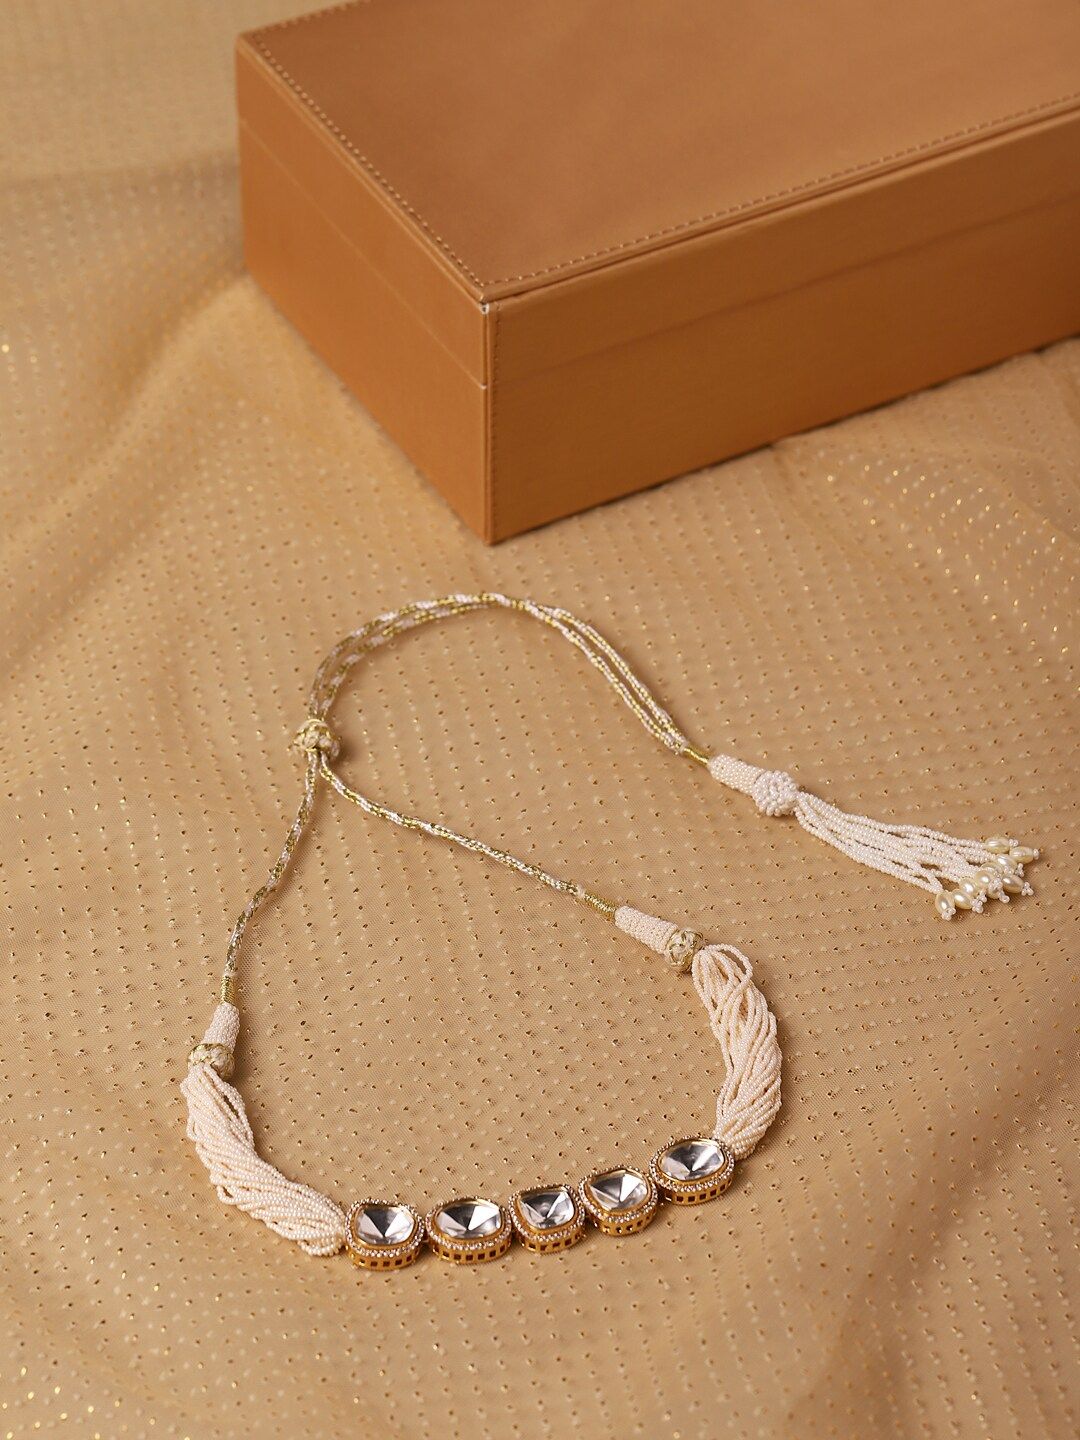 RITU SINGH White & Gold-Toned Rhodium-Plated Choker Necklace Price in India